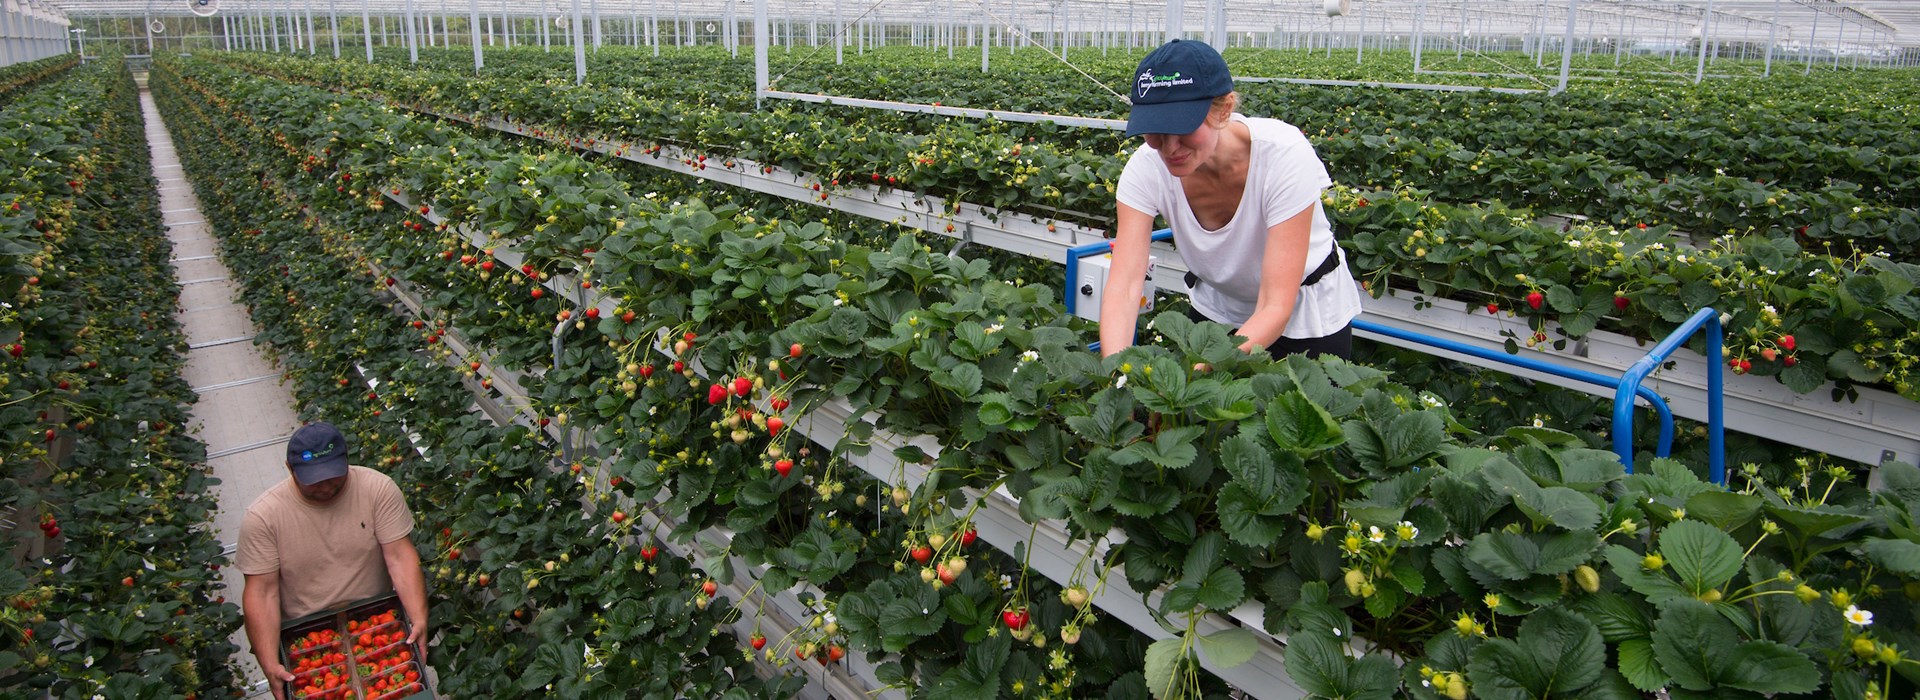 https://fruitgrowersnews.com/wp-content/uploads/2021/07/Vertically-grown-strawberries.jpg